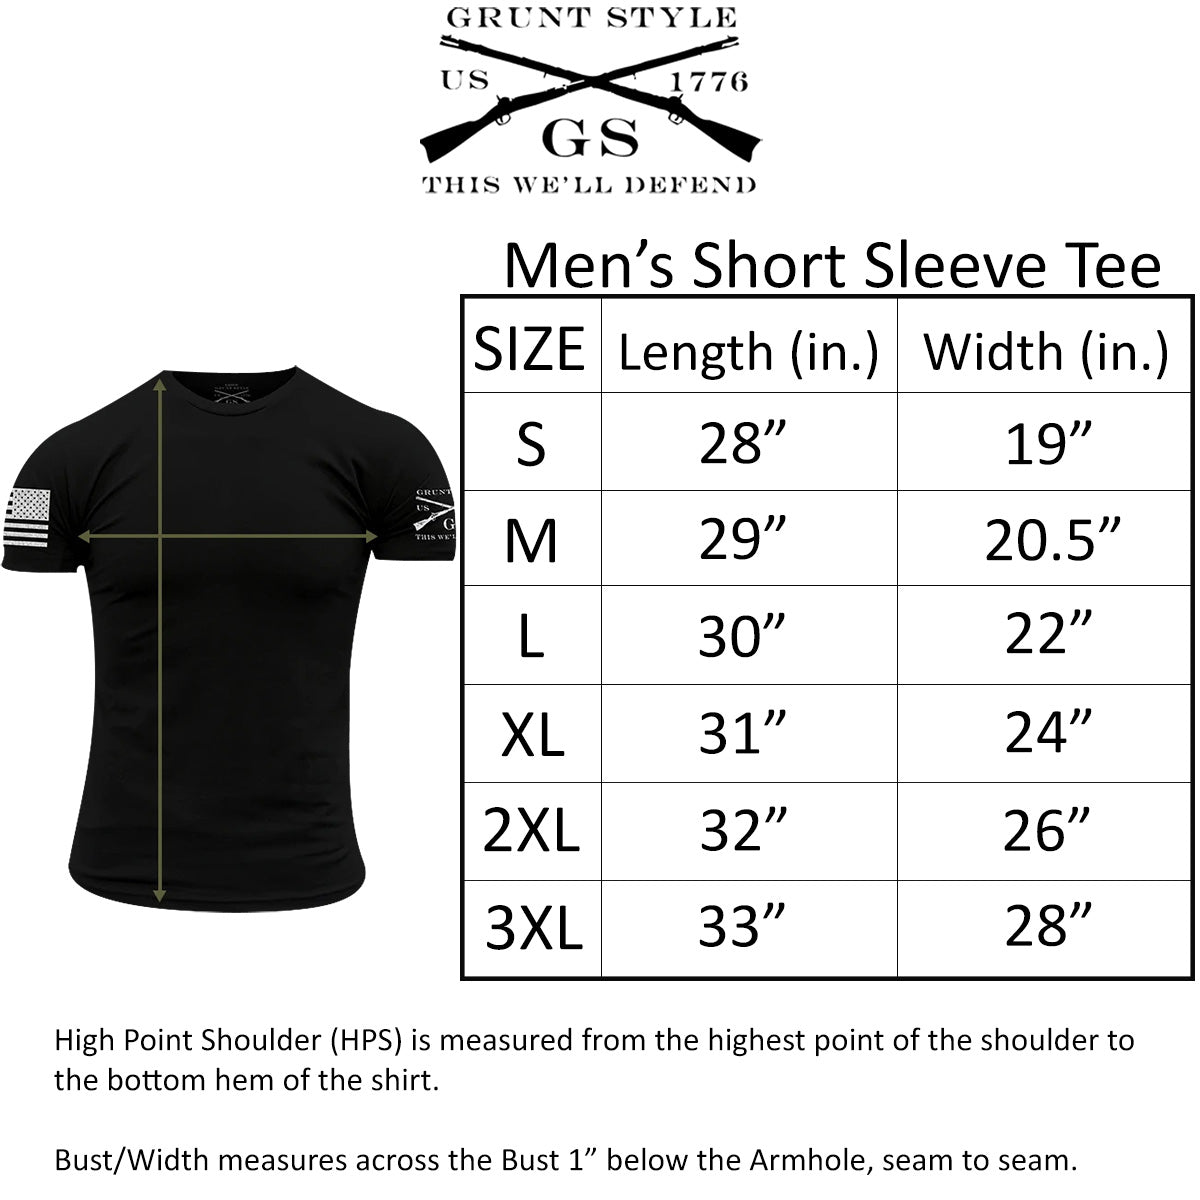 Grunt Style Second Amendment 2.0 T-Shirt